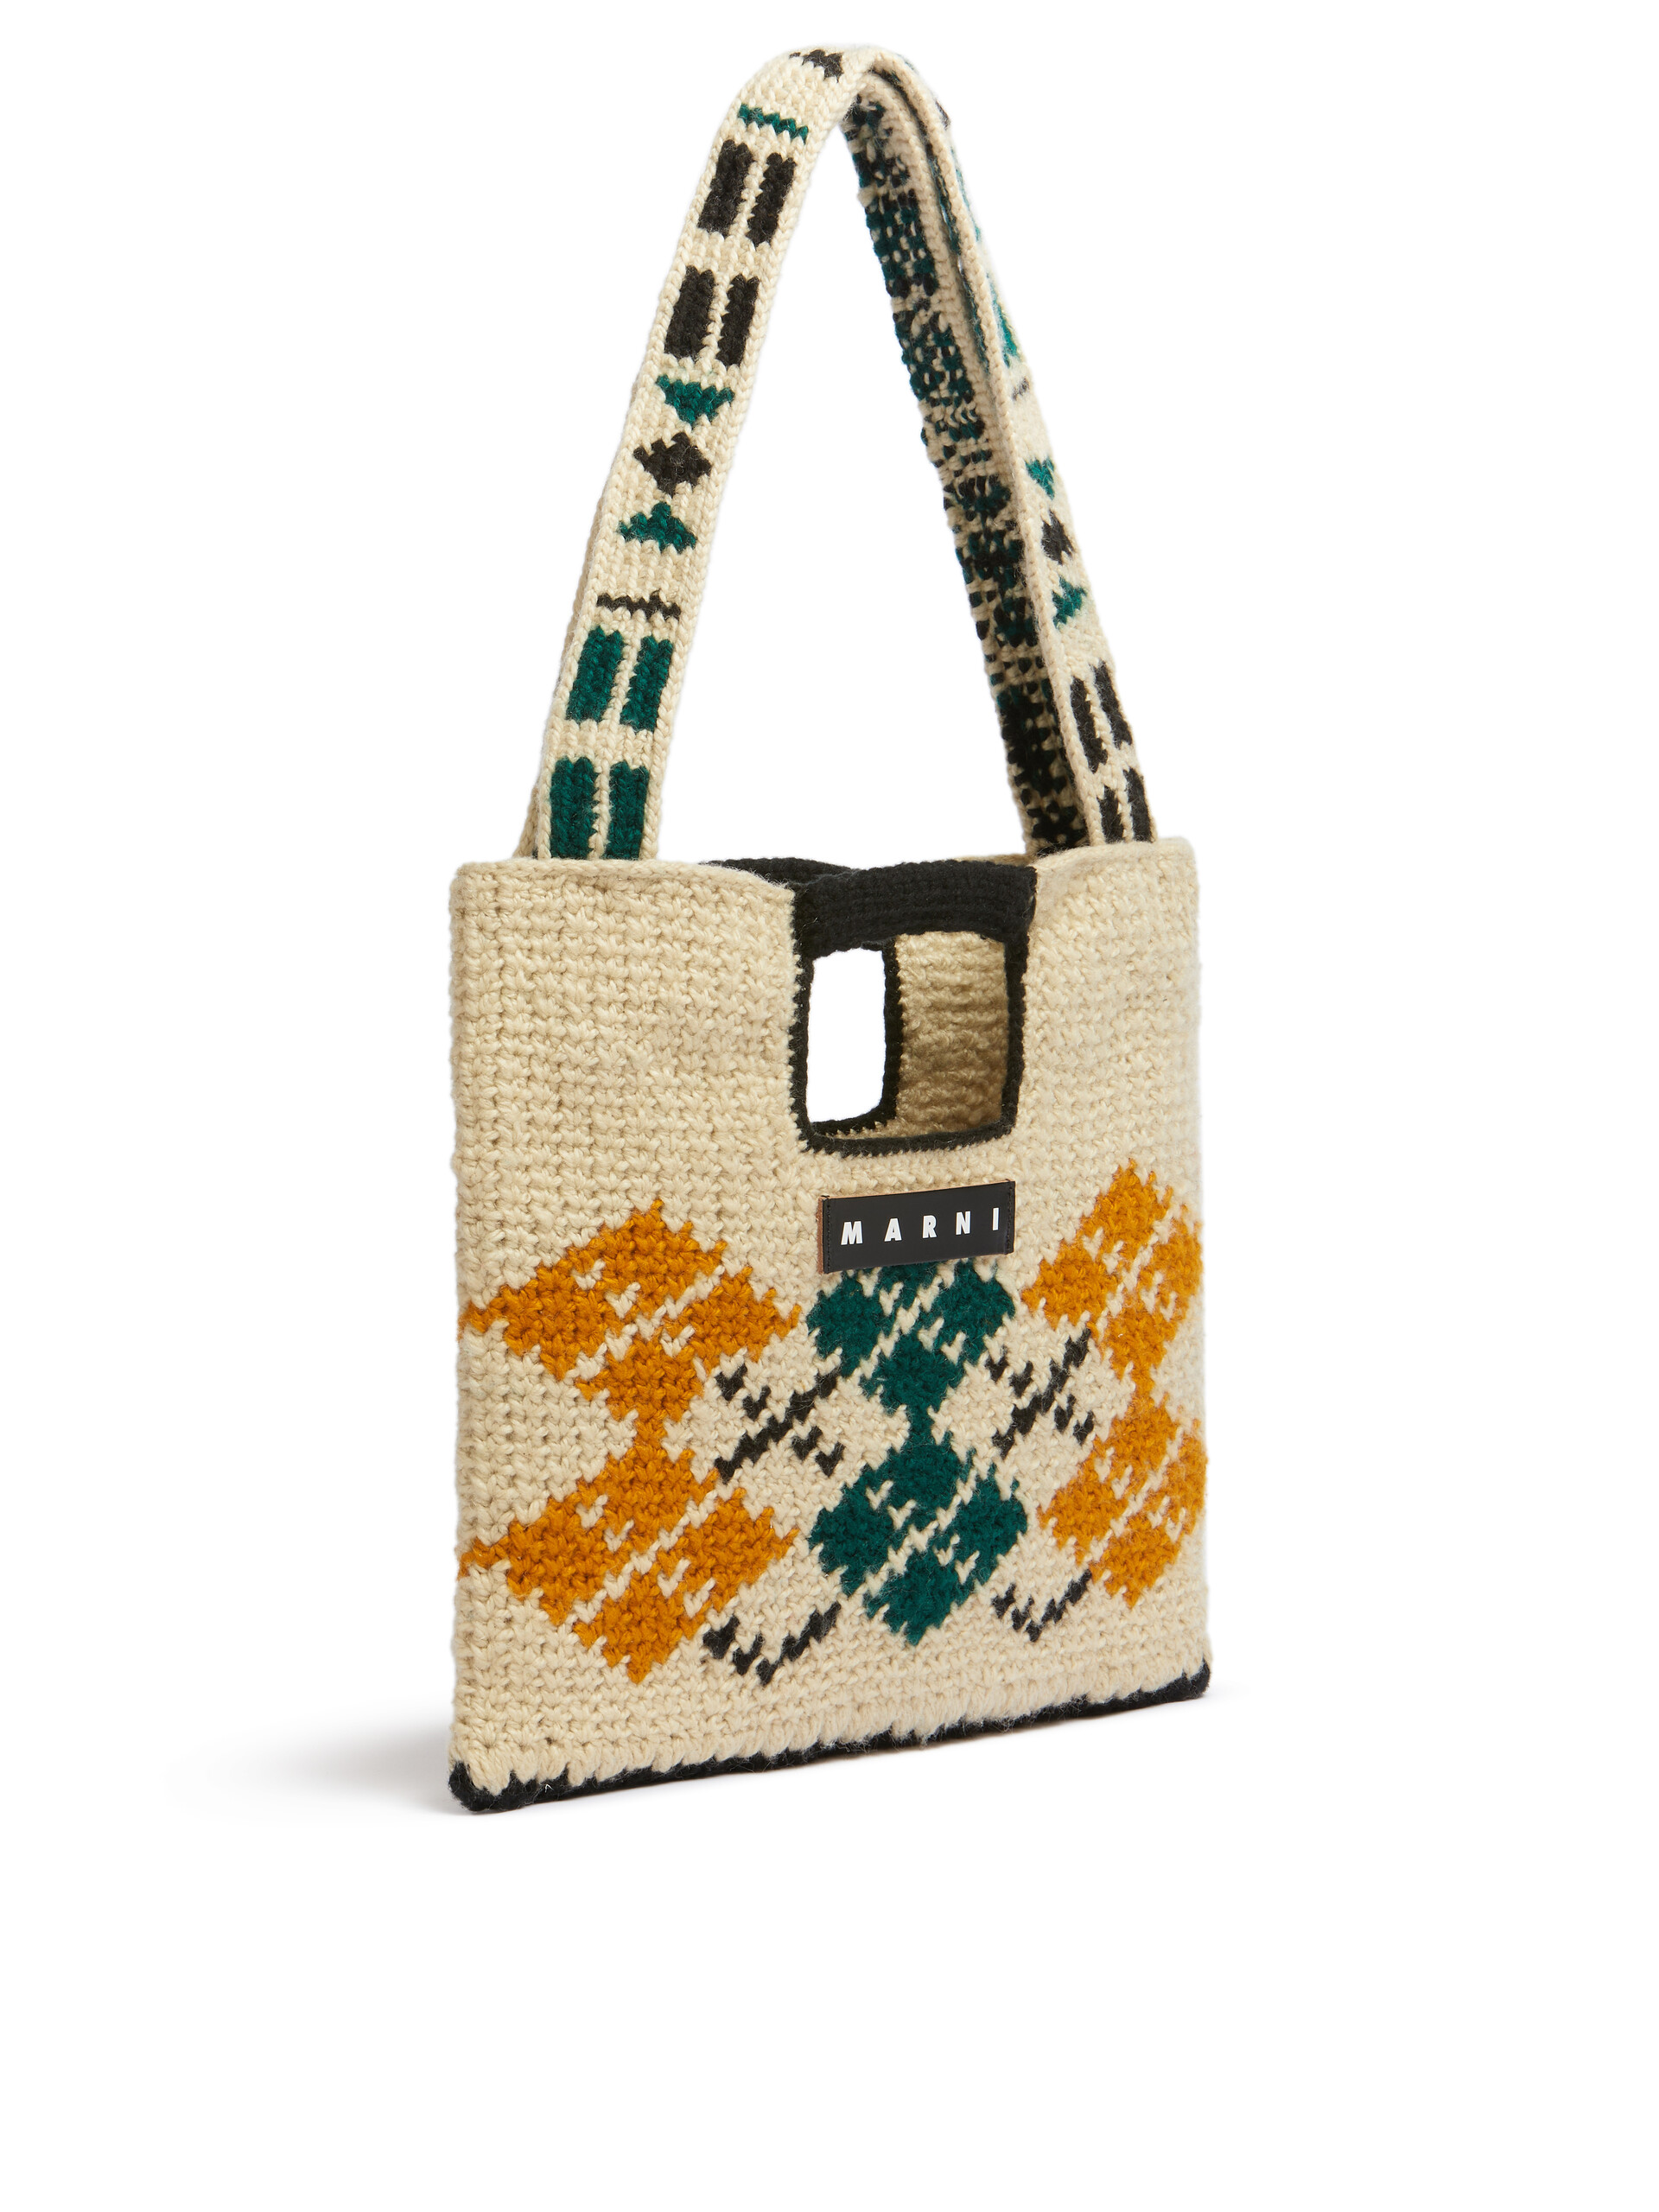 White Rhombus Tech Wool Marni Market Horse Shoulder Bag - Shopping Bags - Image 2